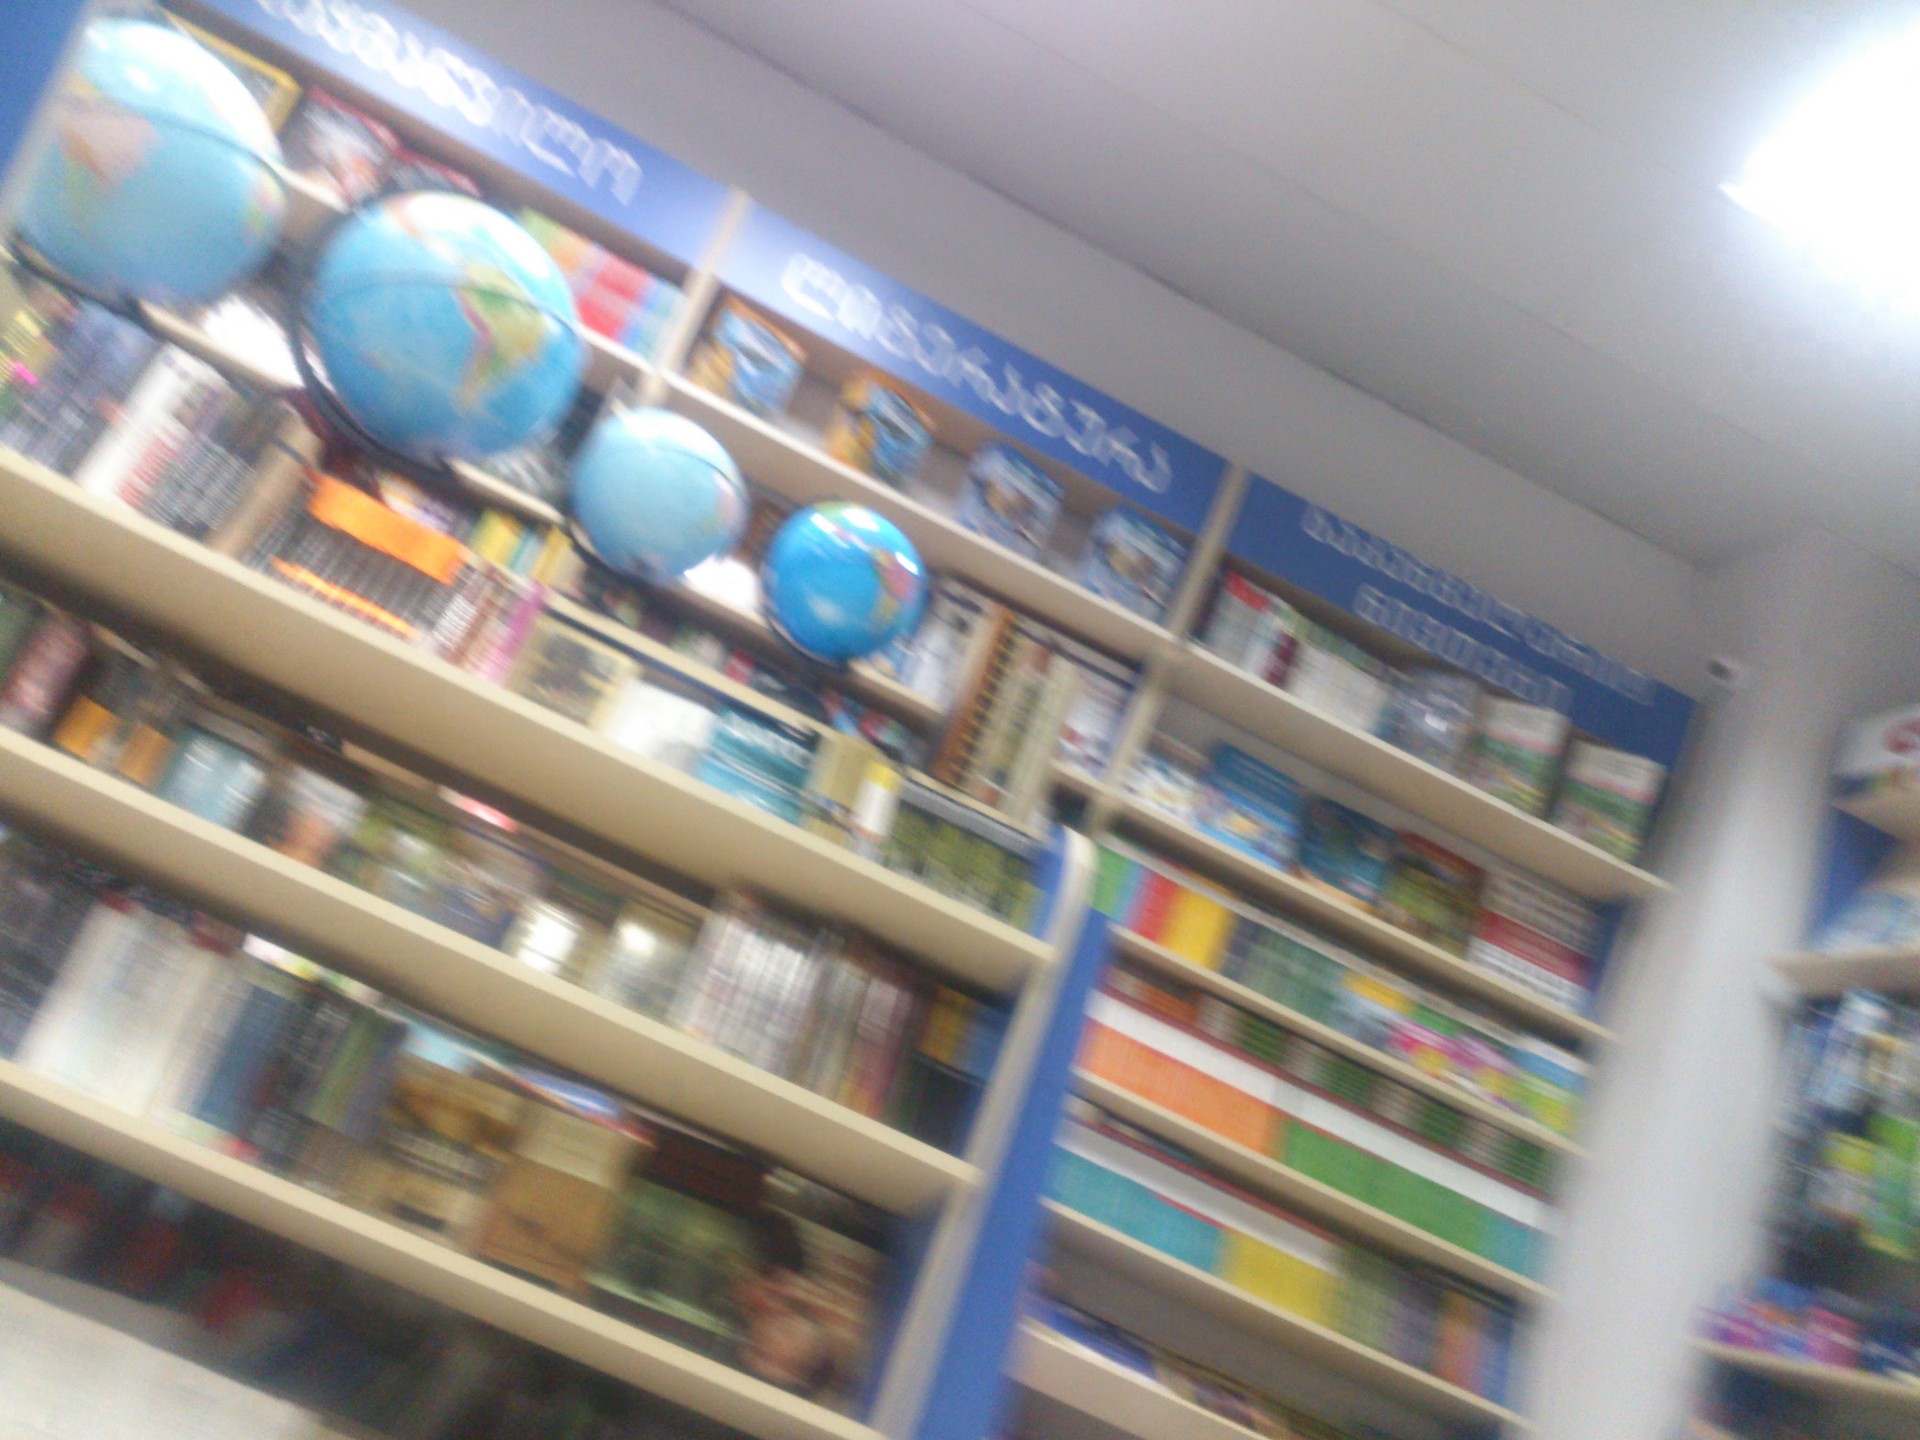 Biblusi Bookstore